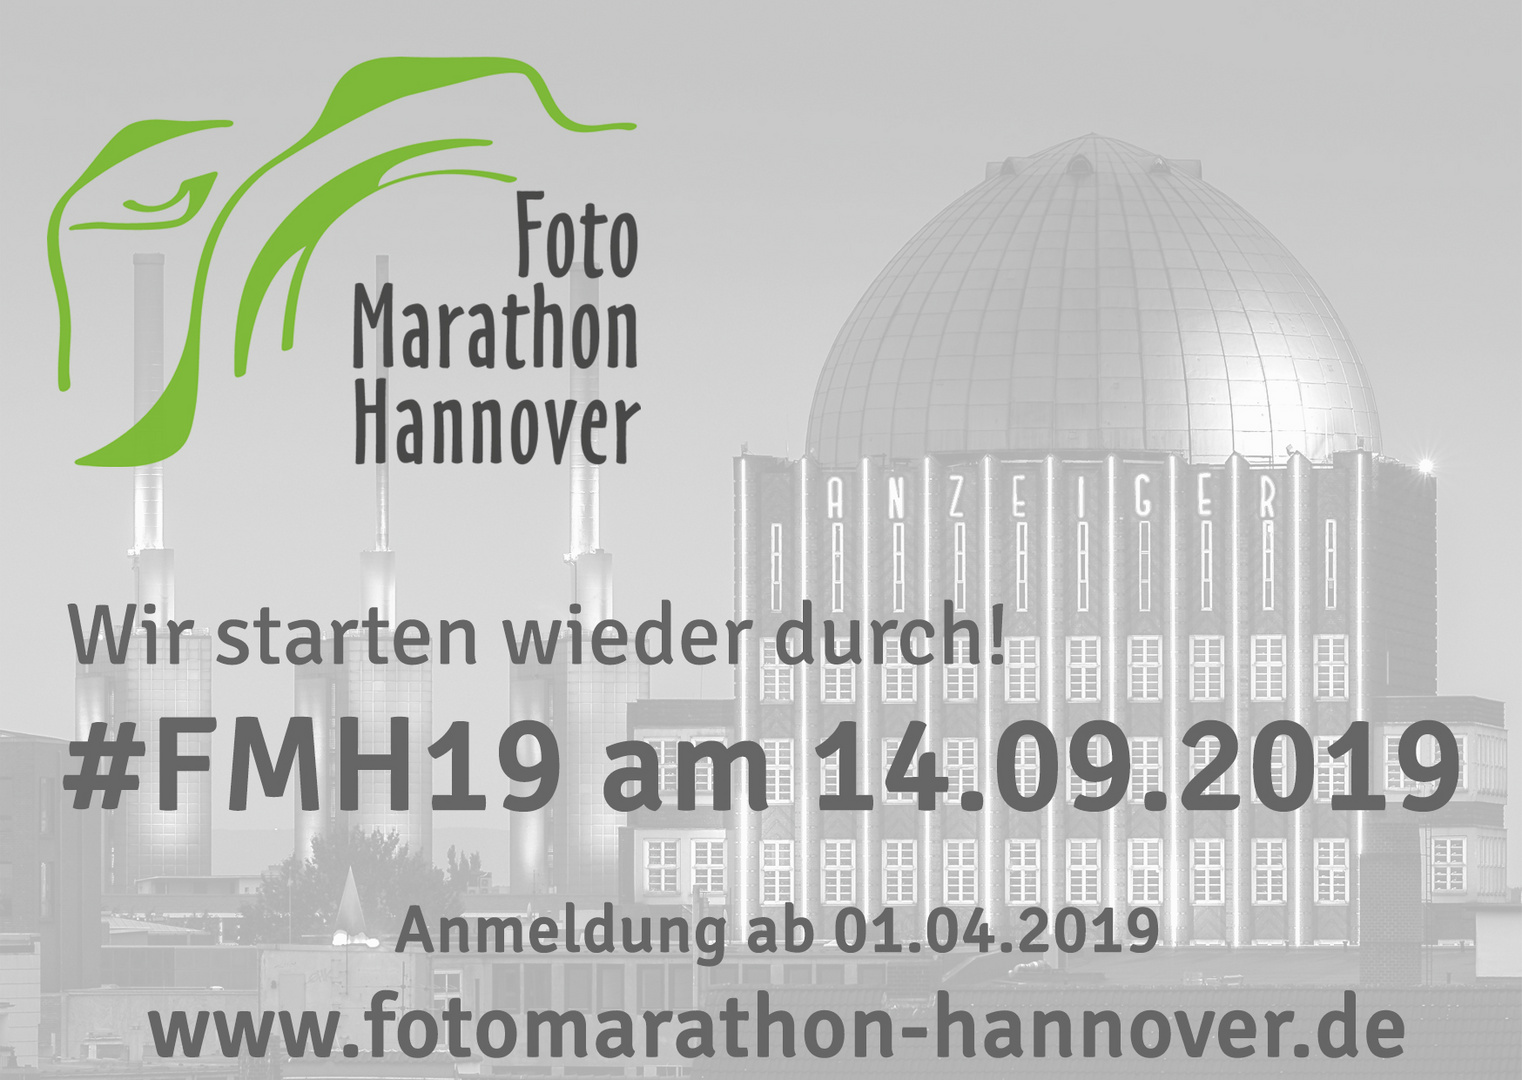 Fotomarathon Hannover 2019